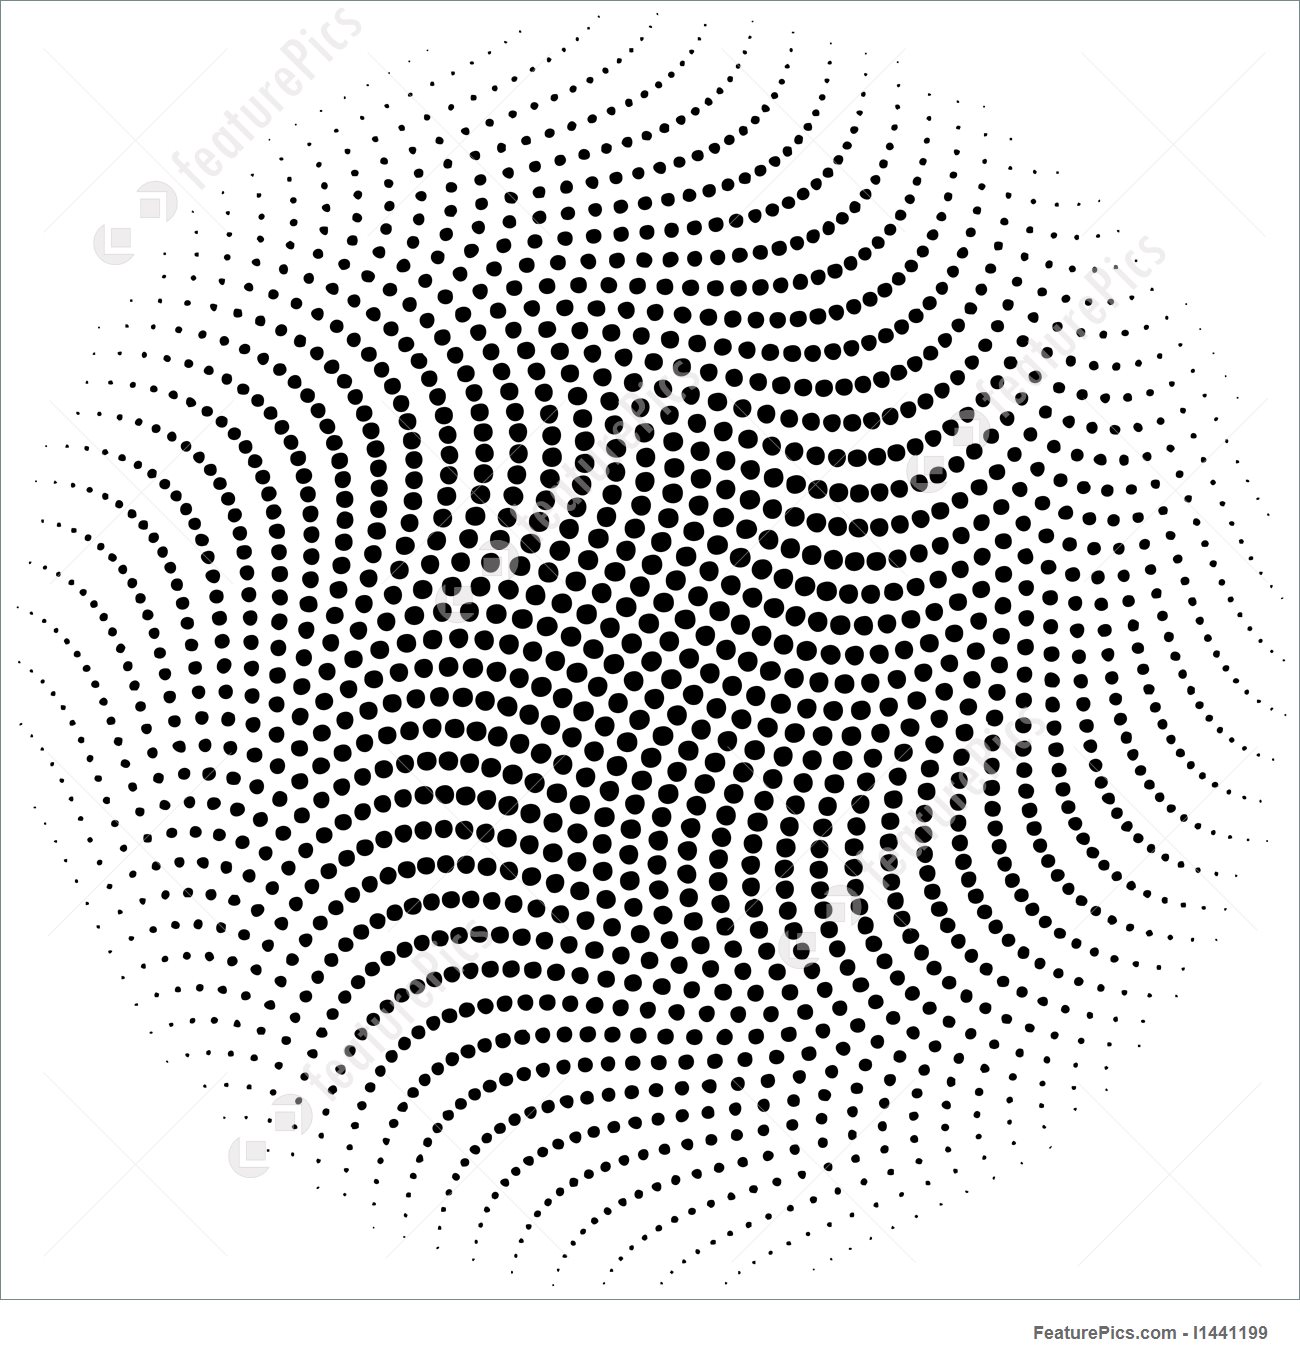 illustrator dot pattern download